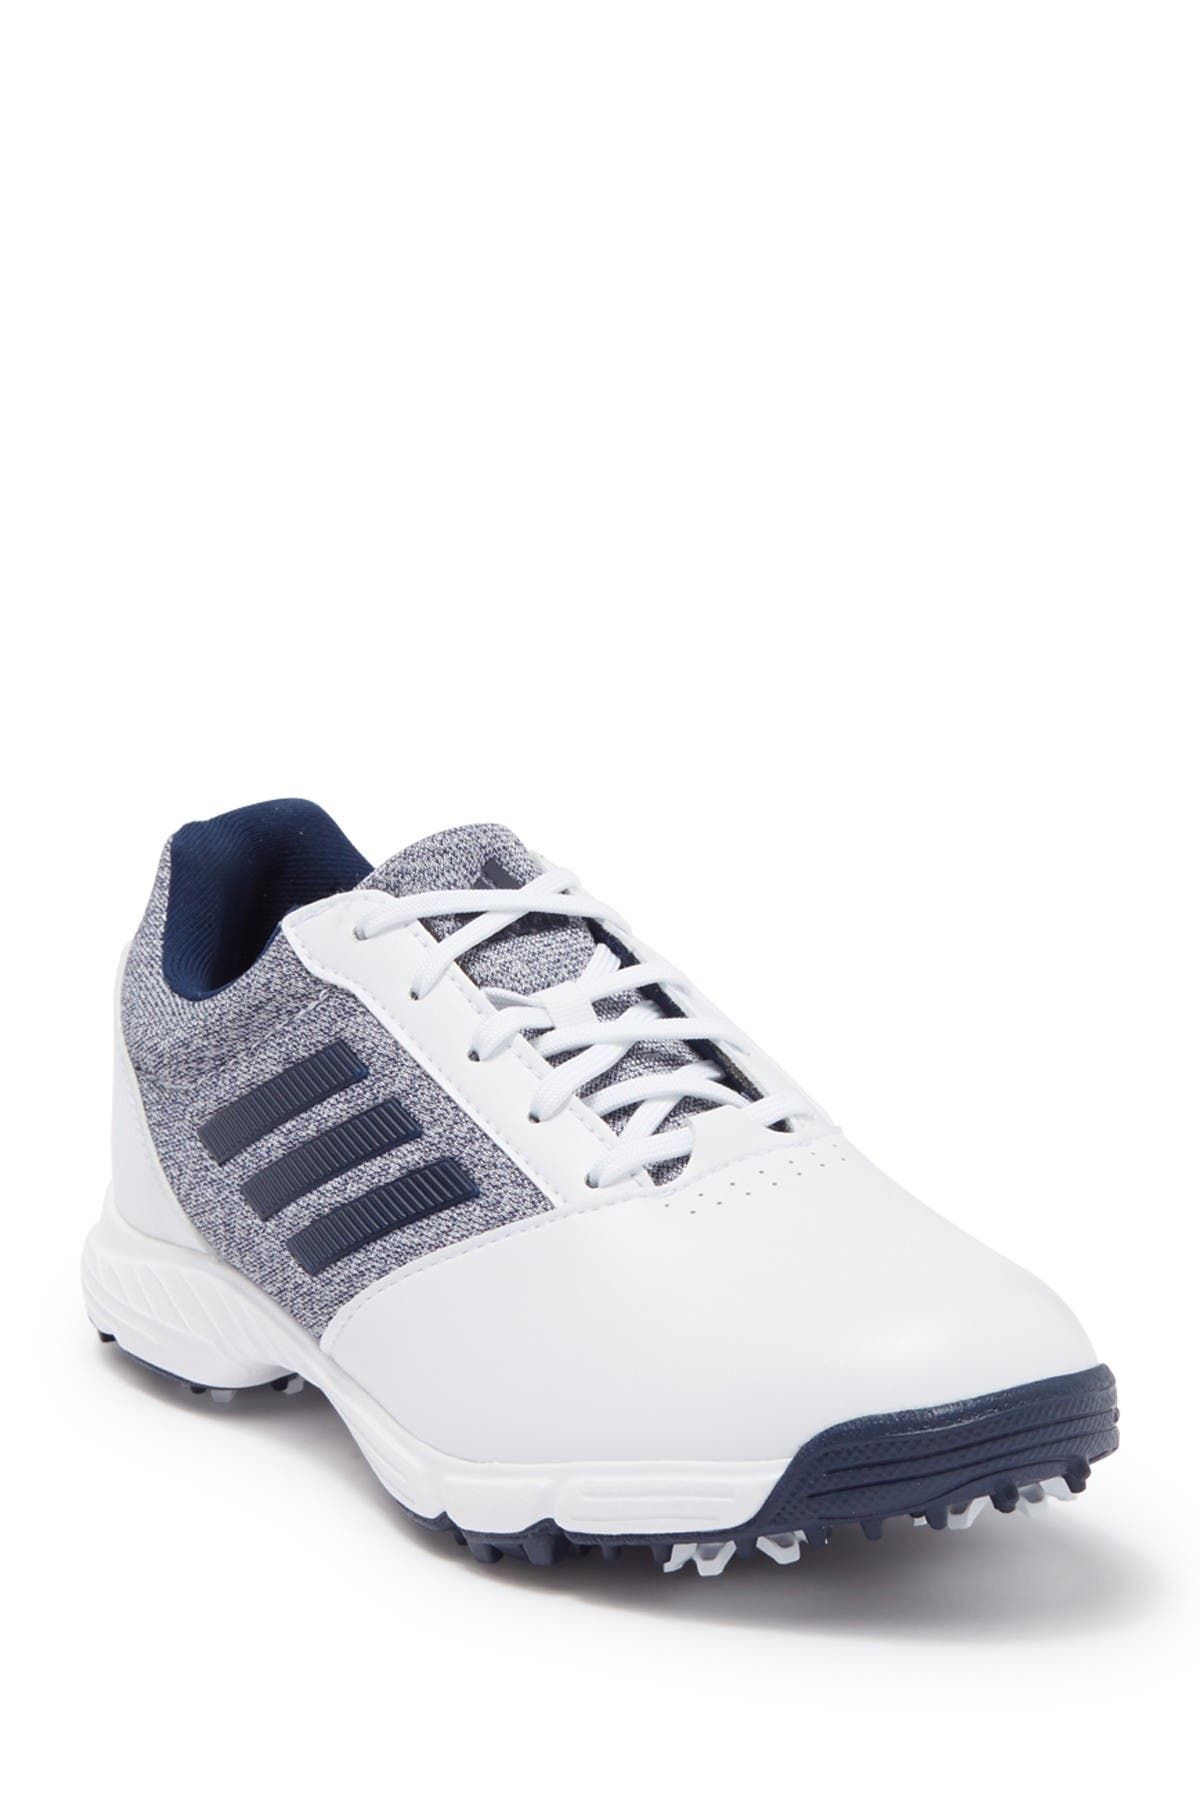 Adidas Golf Tech Response Golf Shoe In White